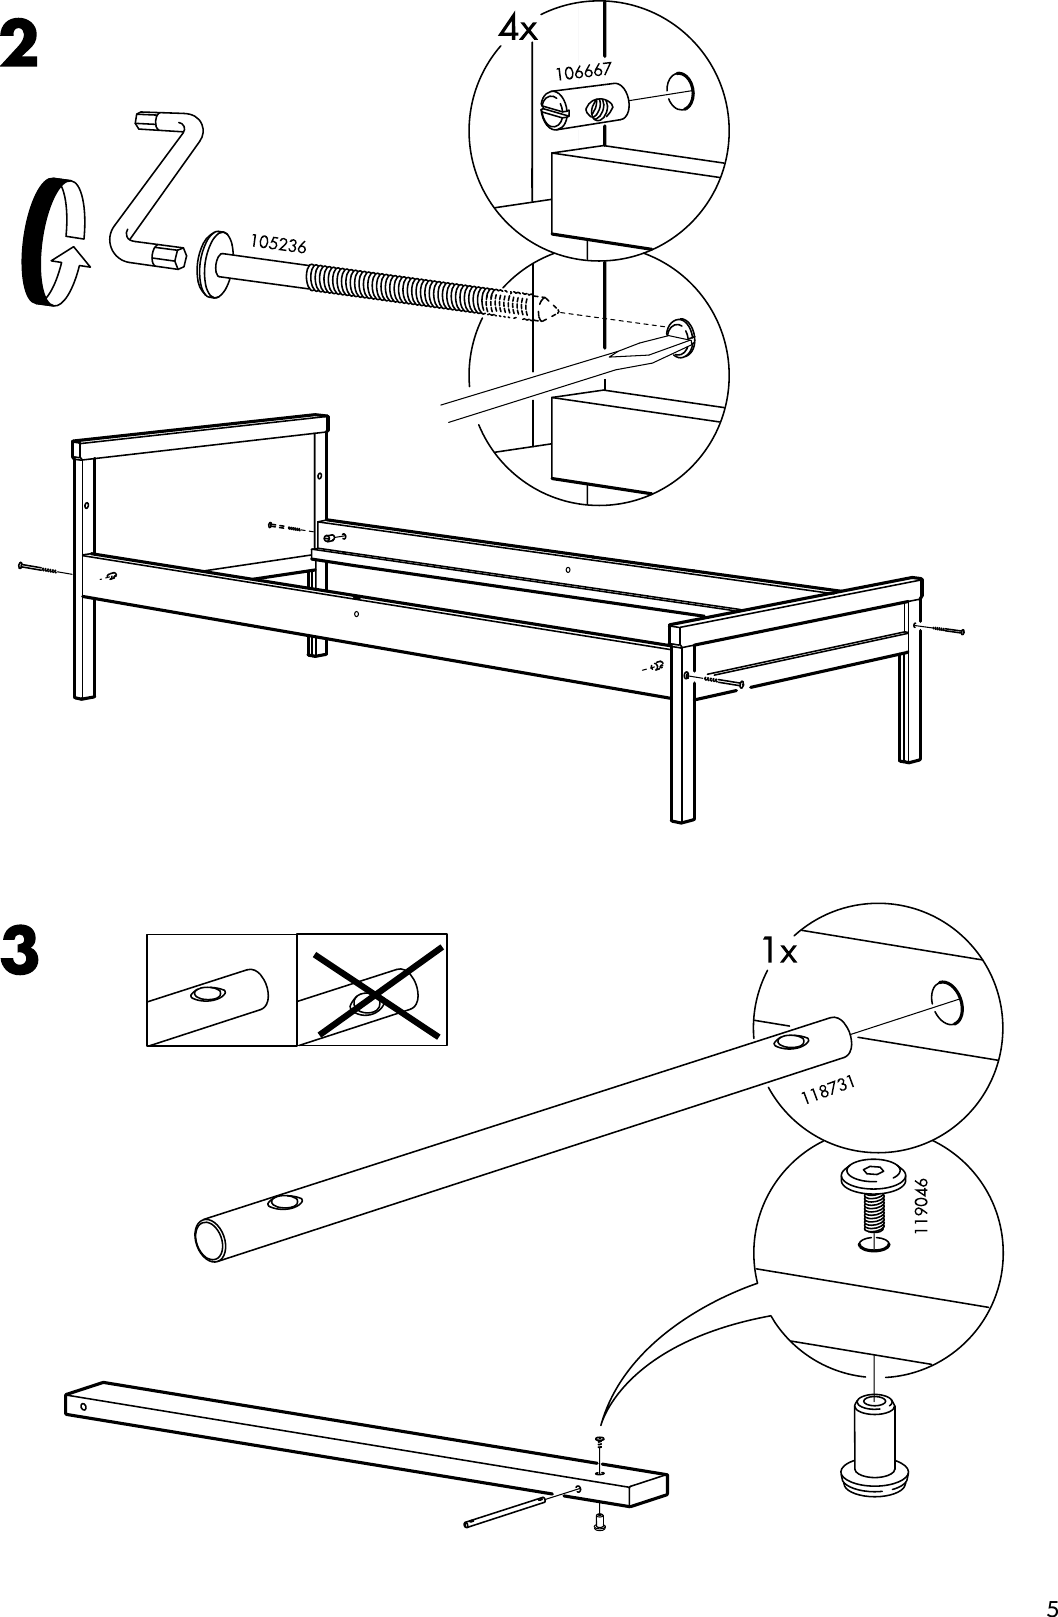 Page 5 of 8 - Ikea Ikea-Sniglar-Bed-Frame-W-Guide-Rail-Assembly-Instruction